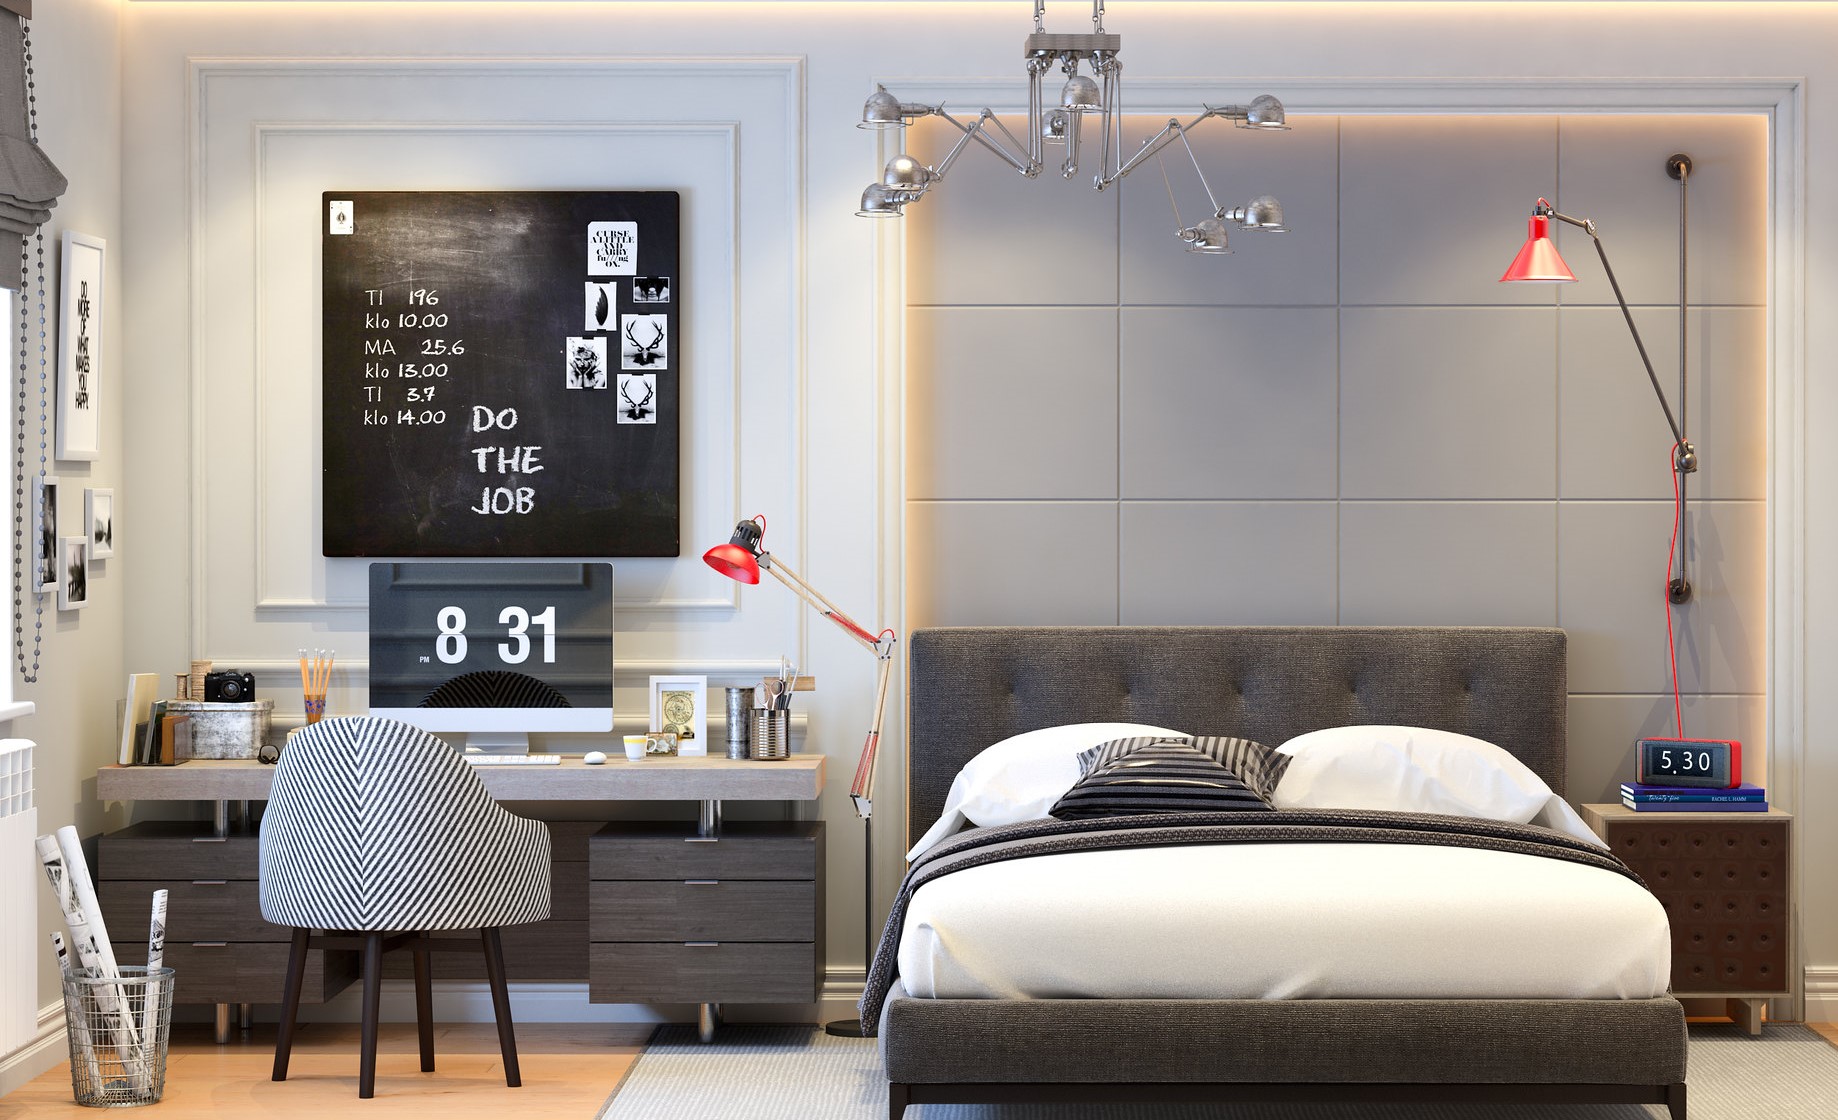 5 Teen Bedroom Ideas. How to Decorate a Teen Room?